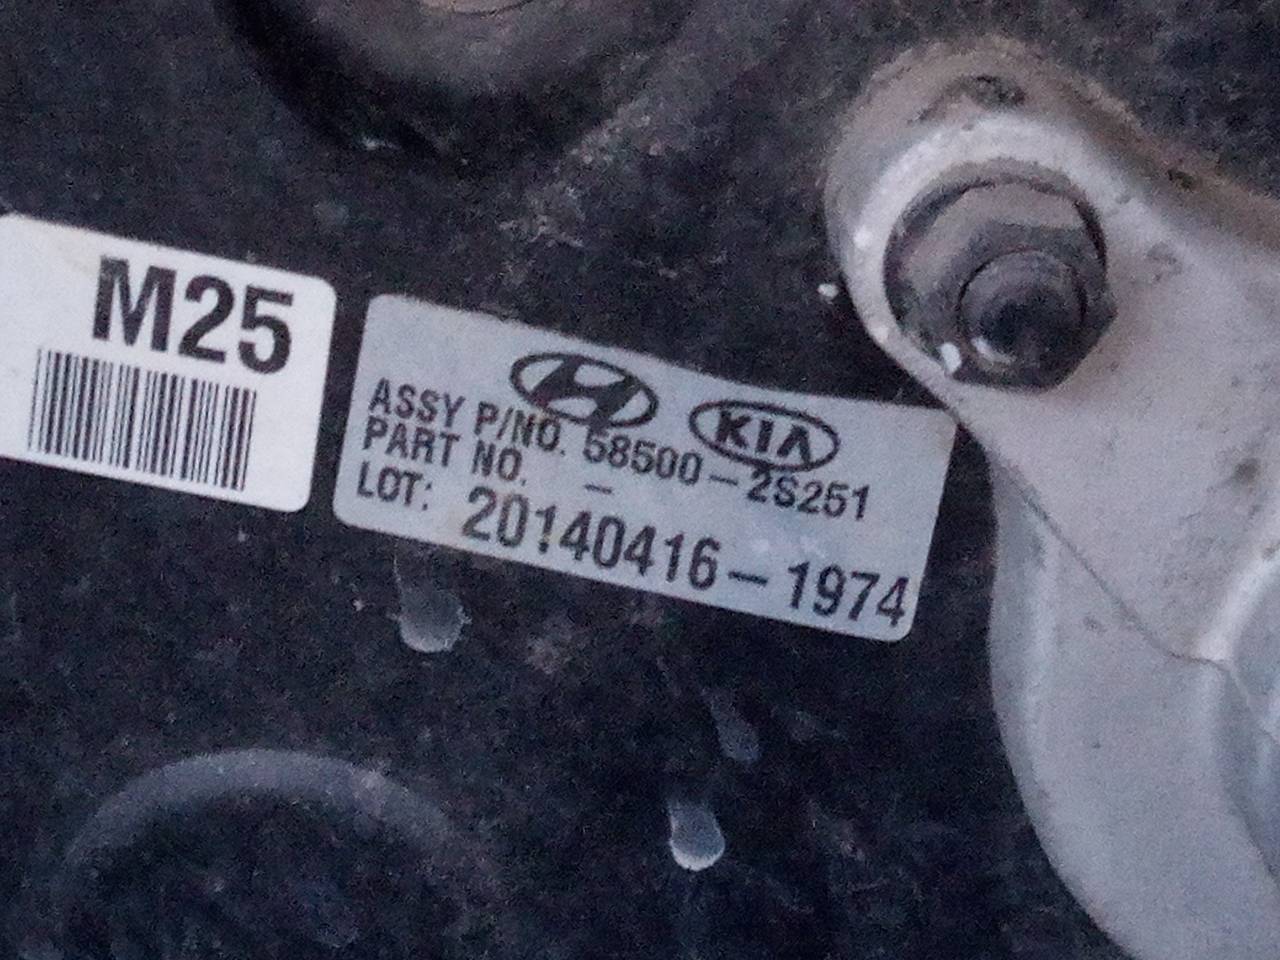 KIA Sportage 3 generation (2010-2015) Brake Servo Booster 585002S251, 201404161974 18759181